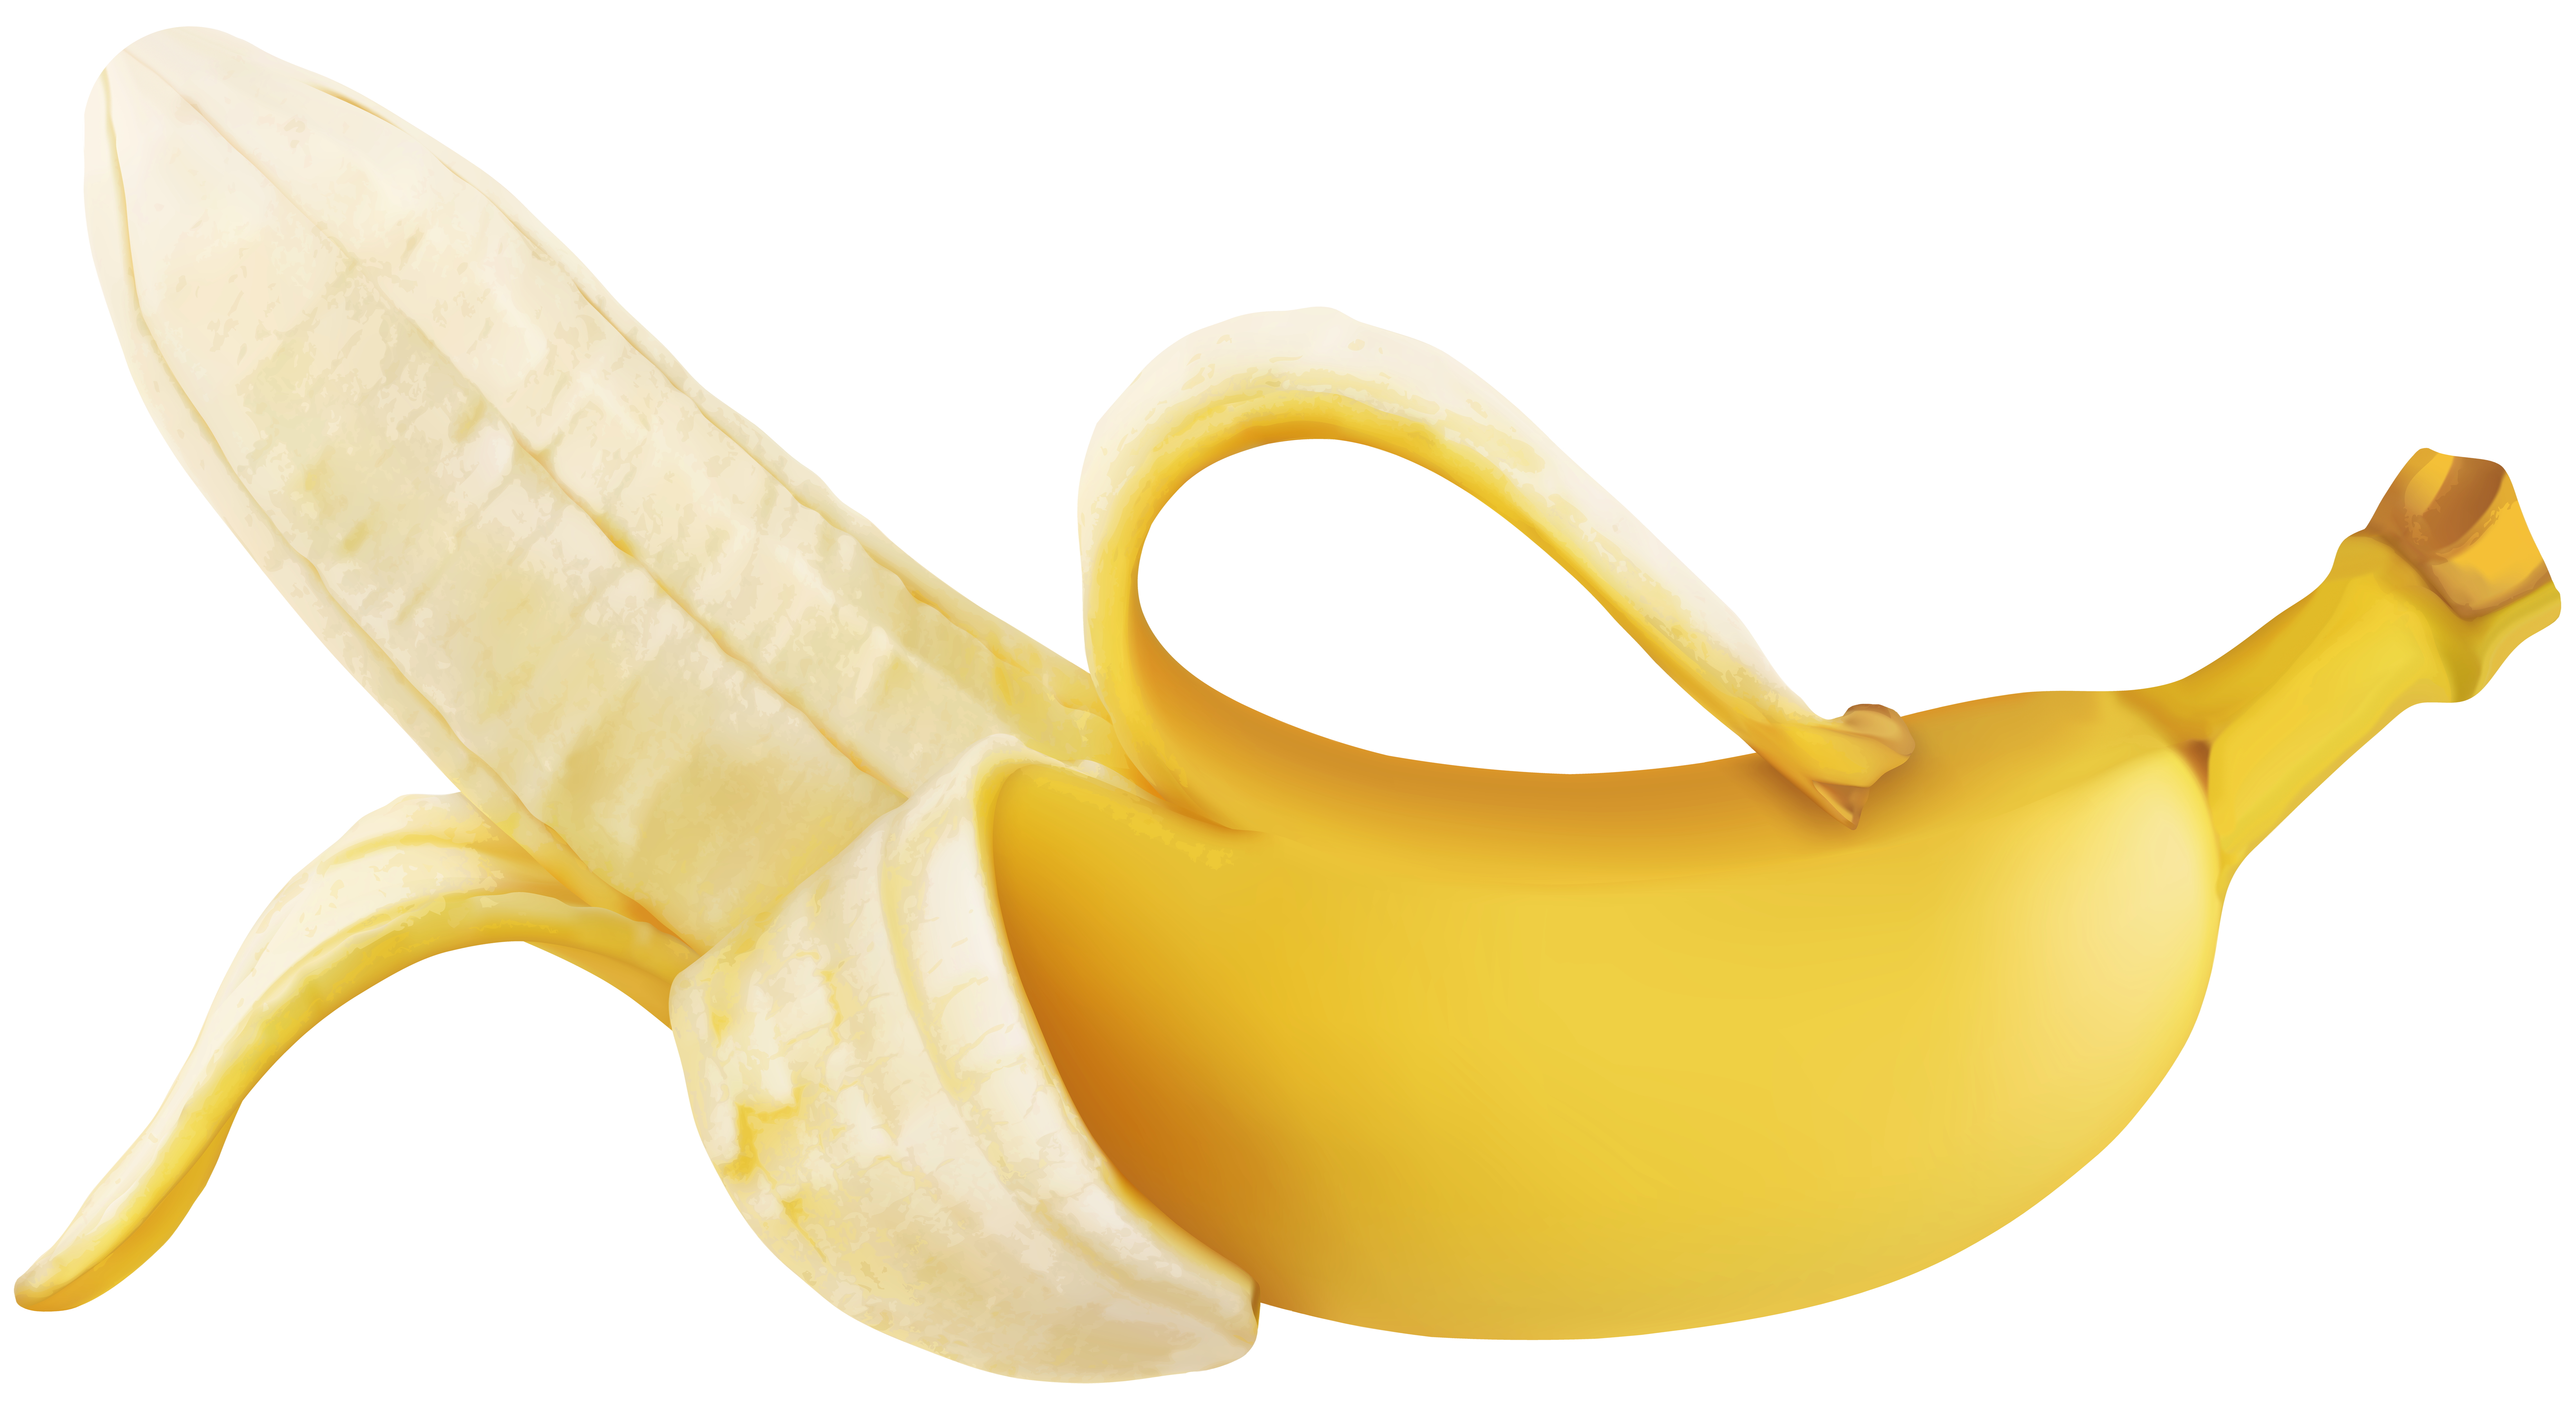 Banana PNG Image for Free Download